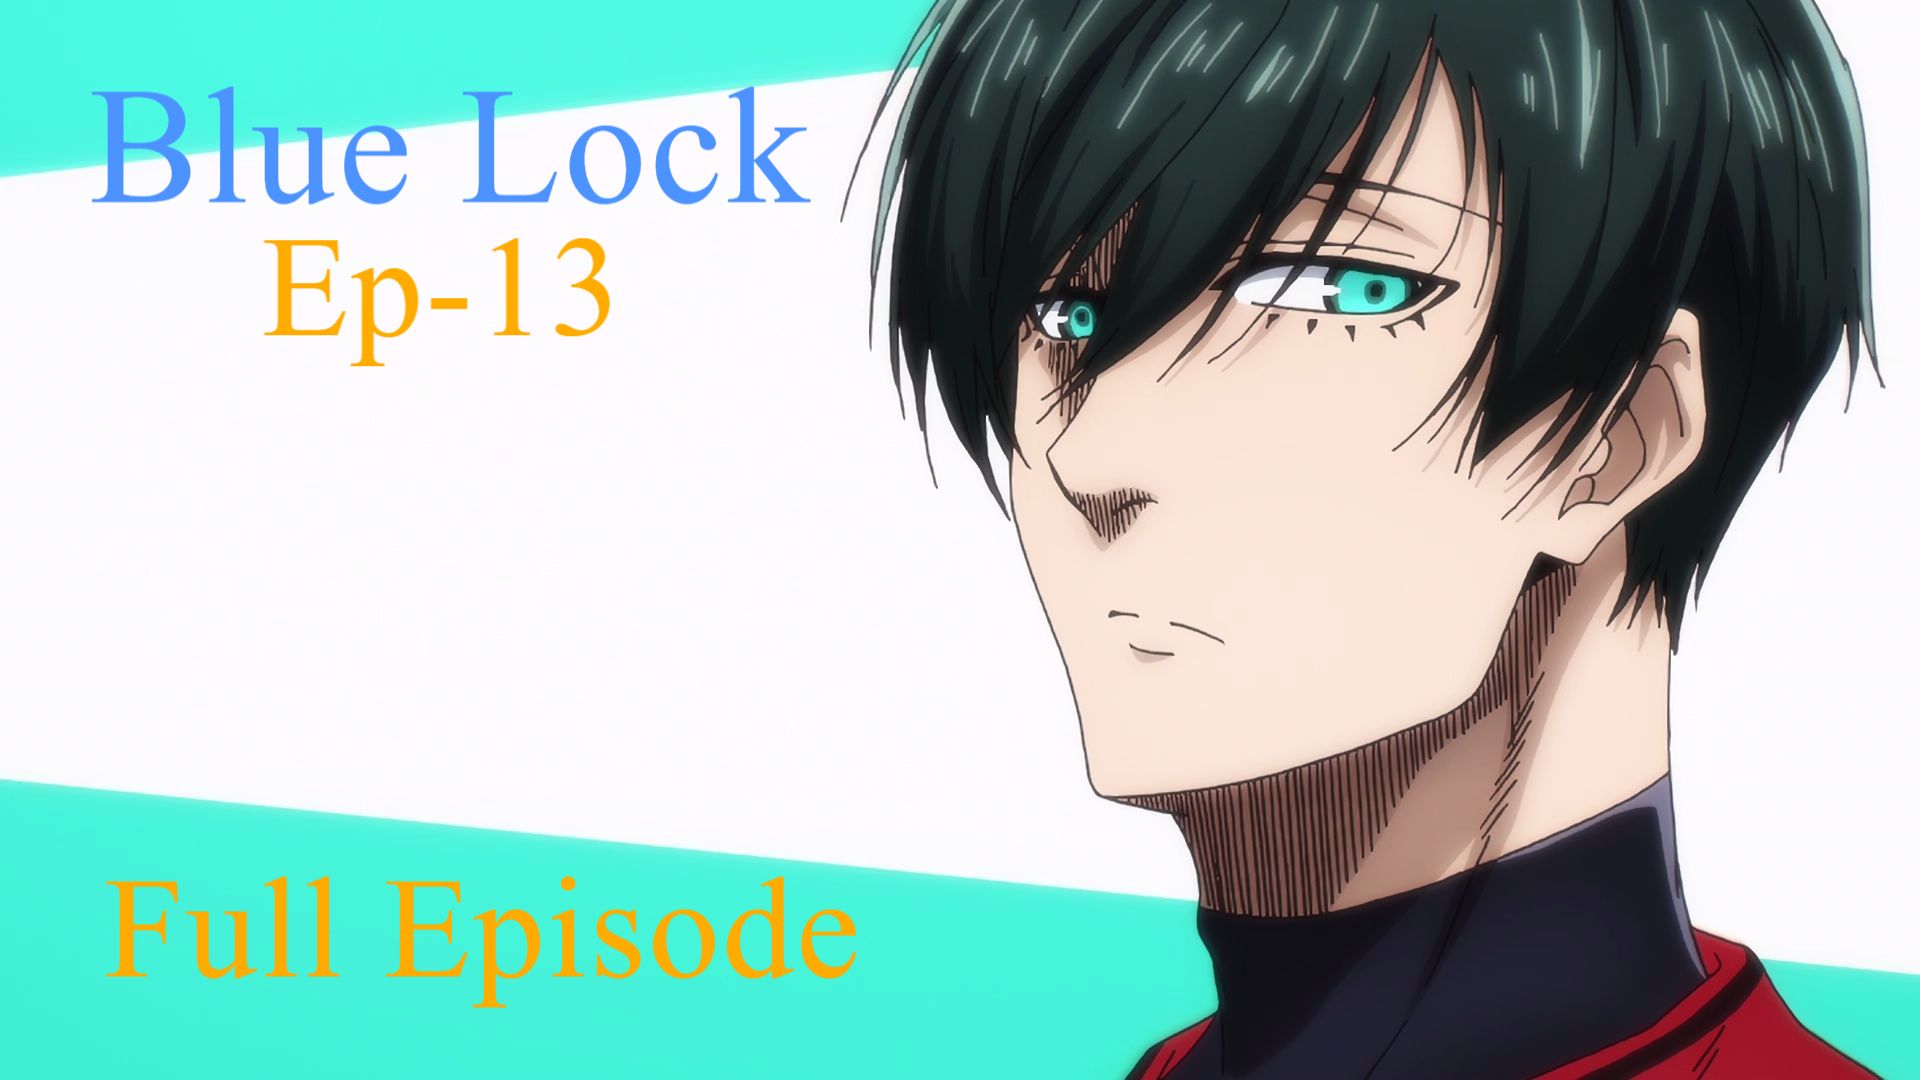 Blue Lock Episode 13 Preview Images Revealed  Anime Corner